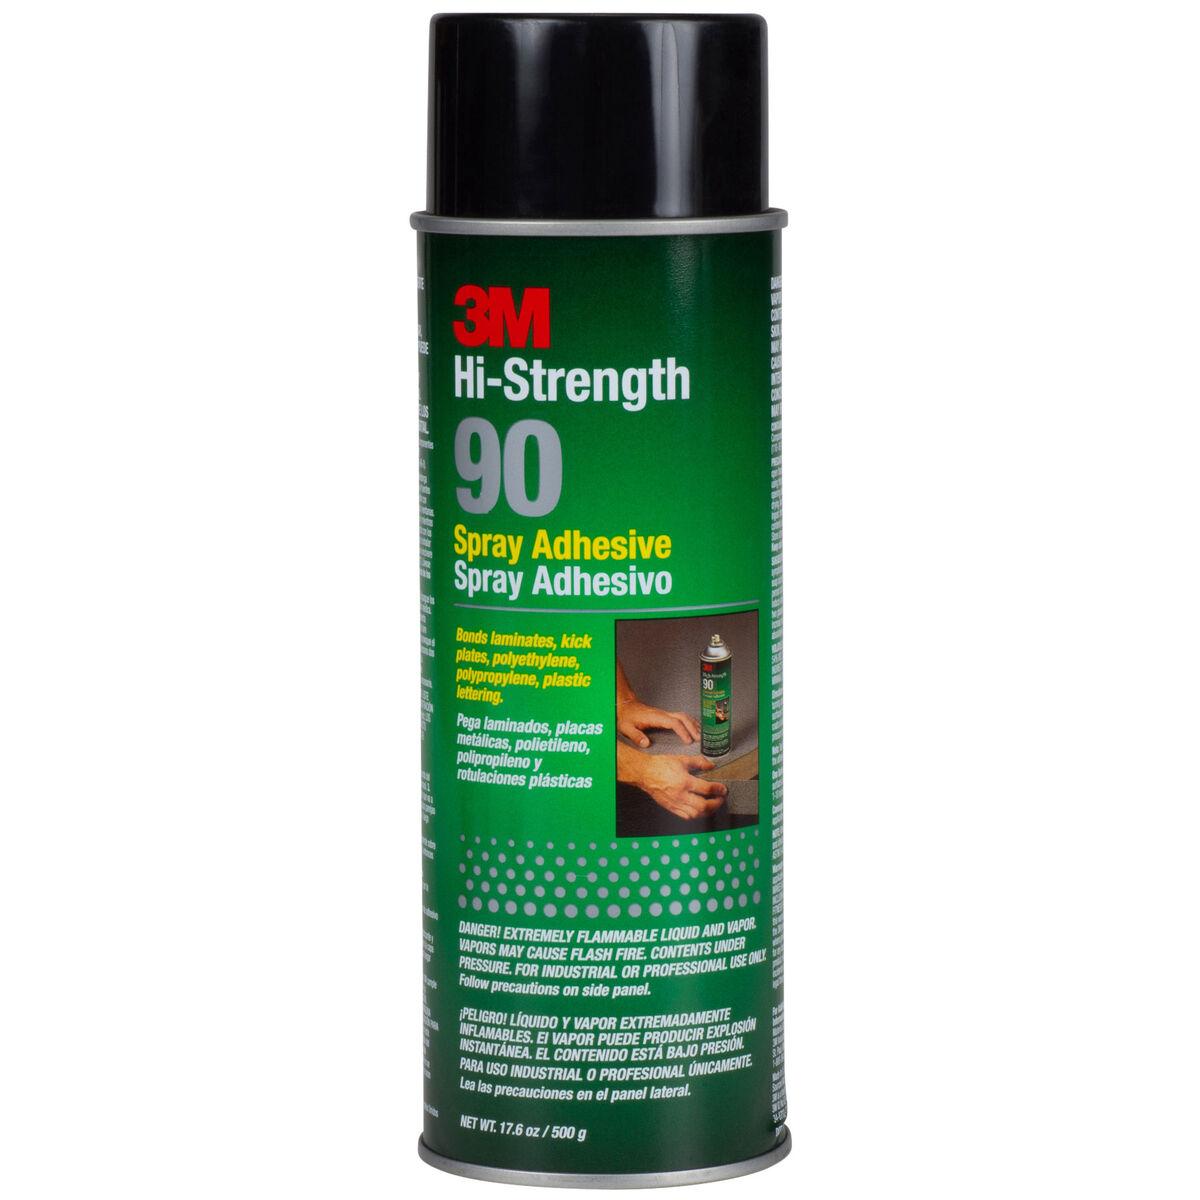 3M Hi-Strength 90 Contact Spray Adhesive, 17.6 oz, 1 Can, Green